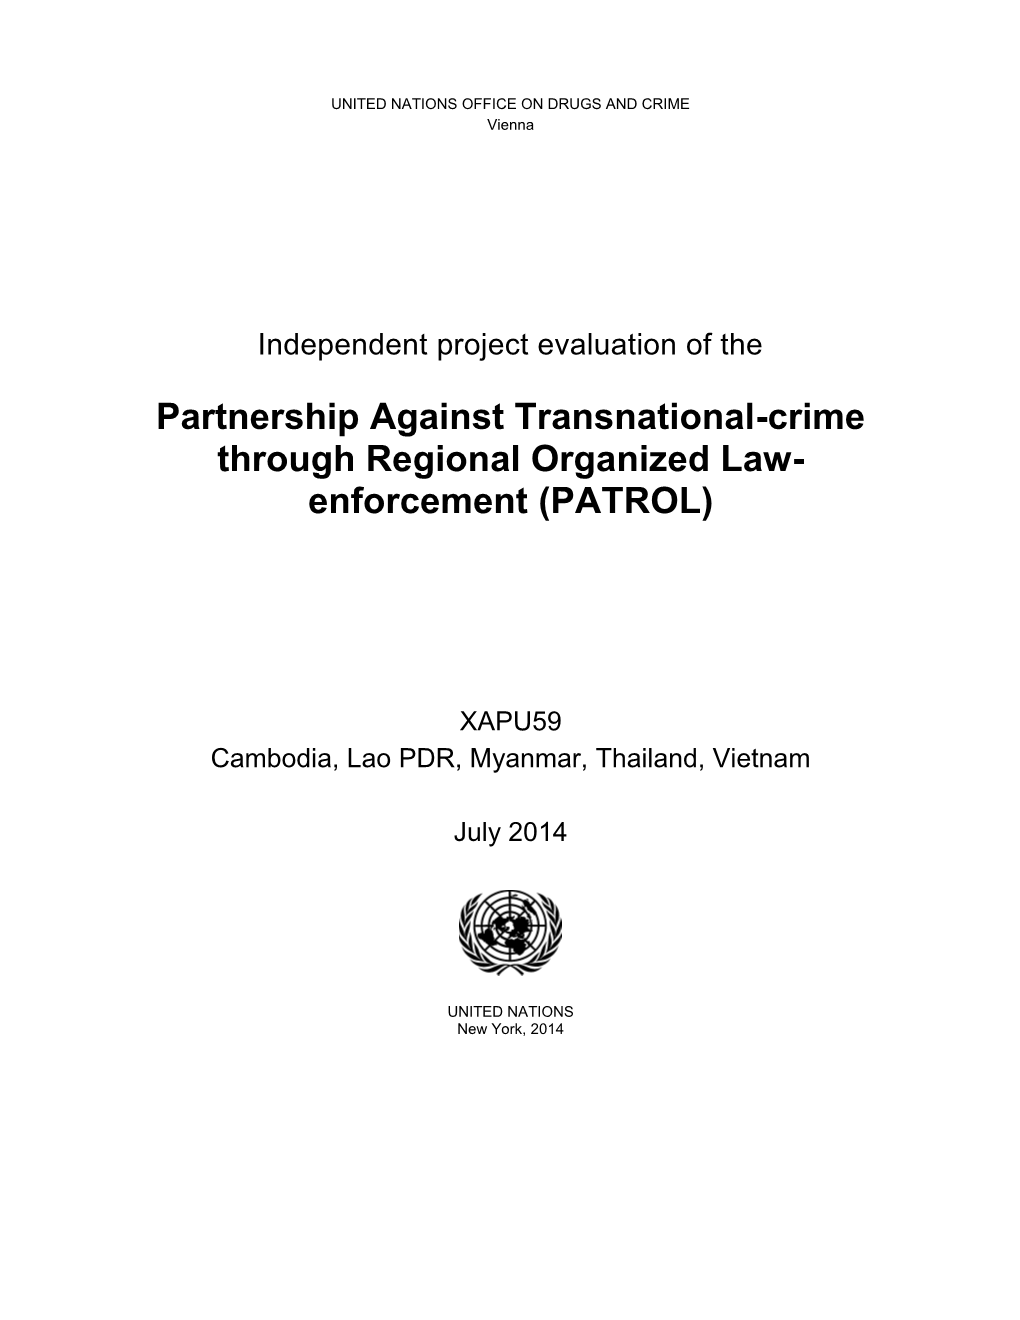 Partnership Against Transnational-Crime Through Regional Organized Law- Enforcement (PATROL)